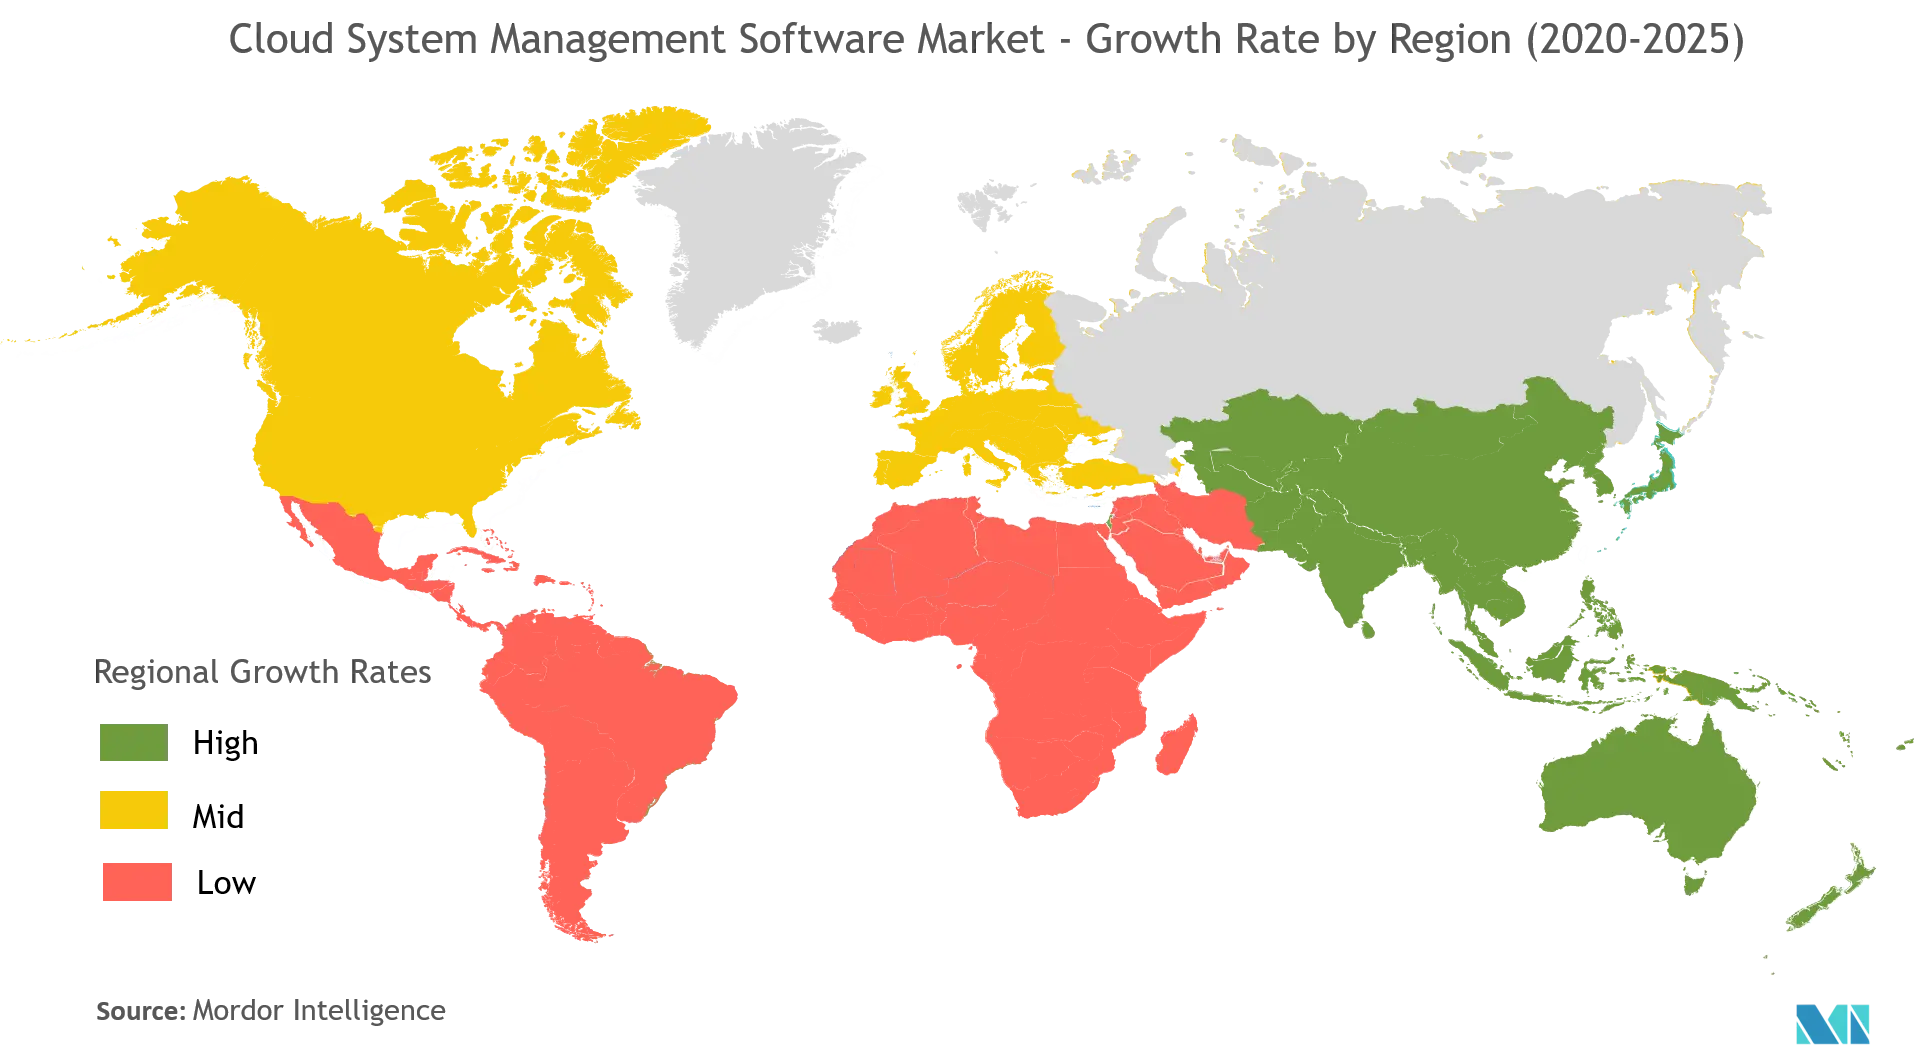  Cloud System Management Software Market share